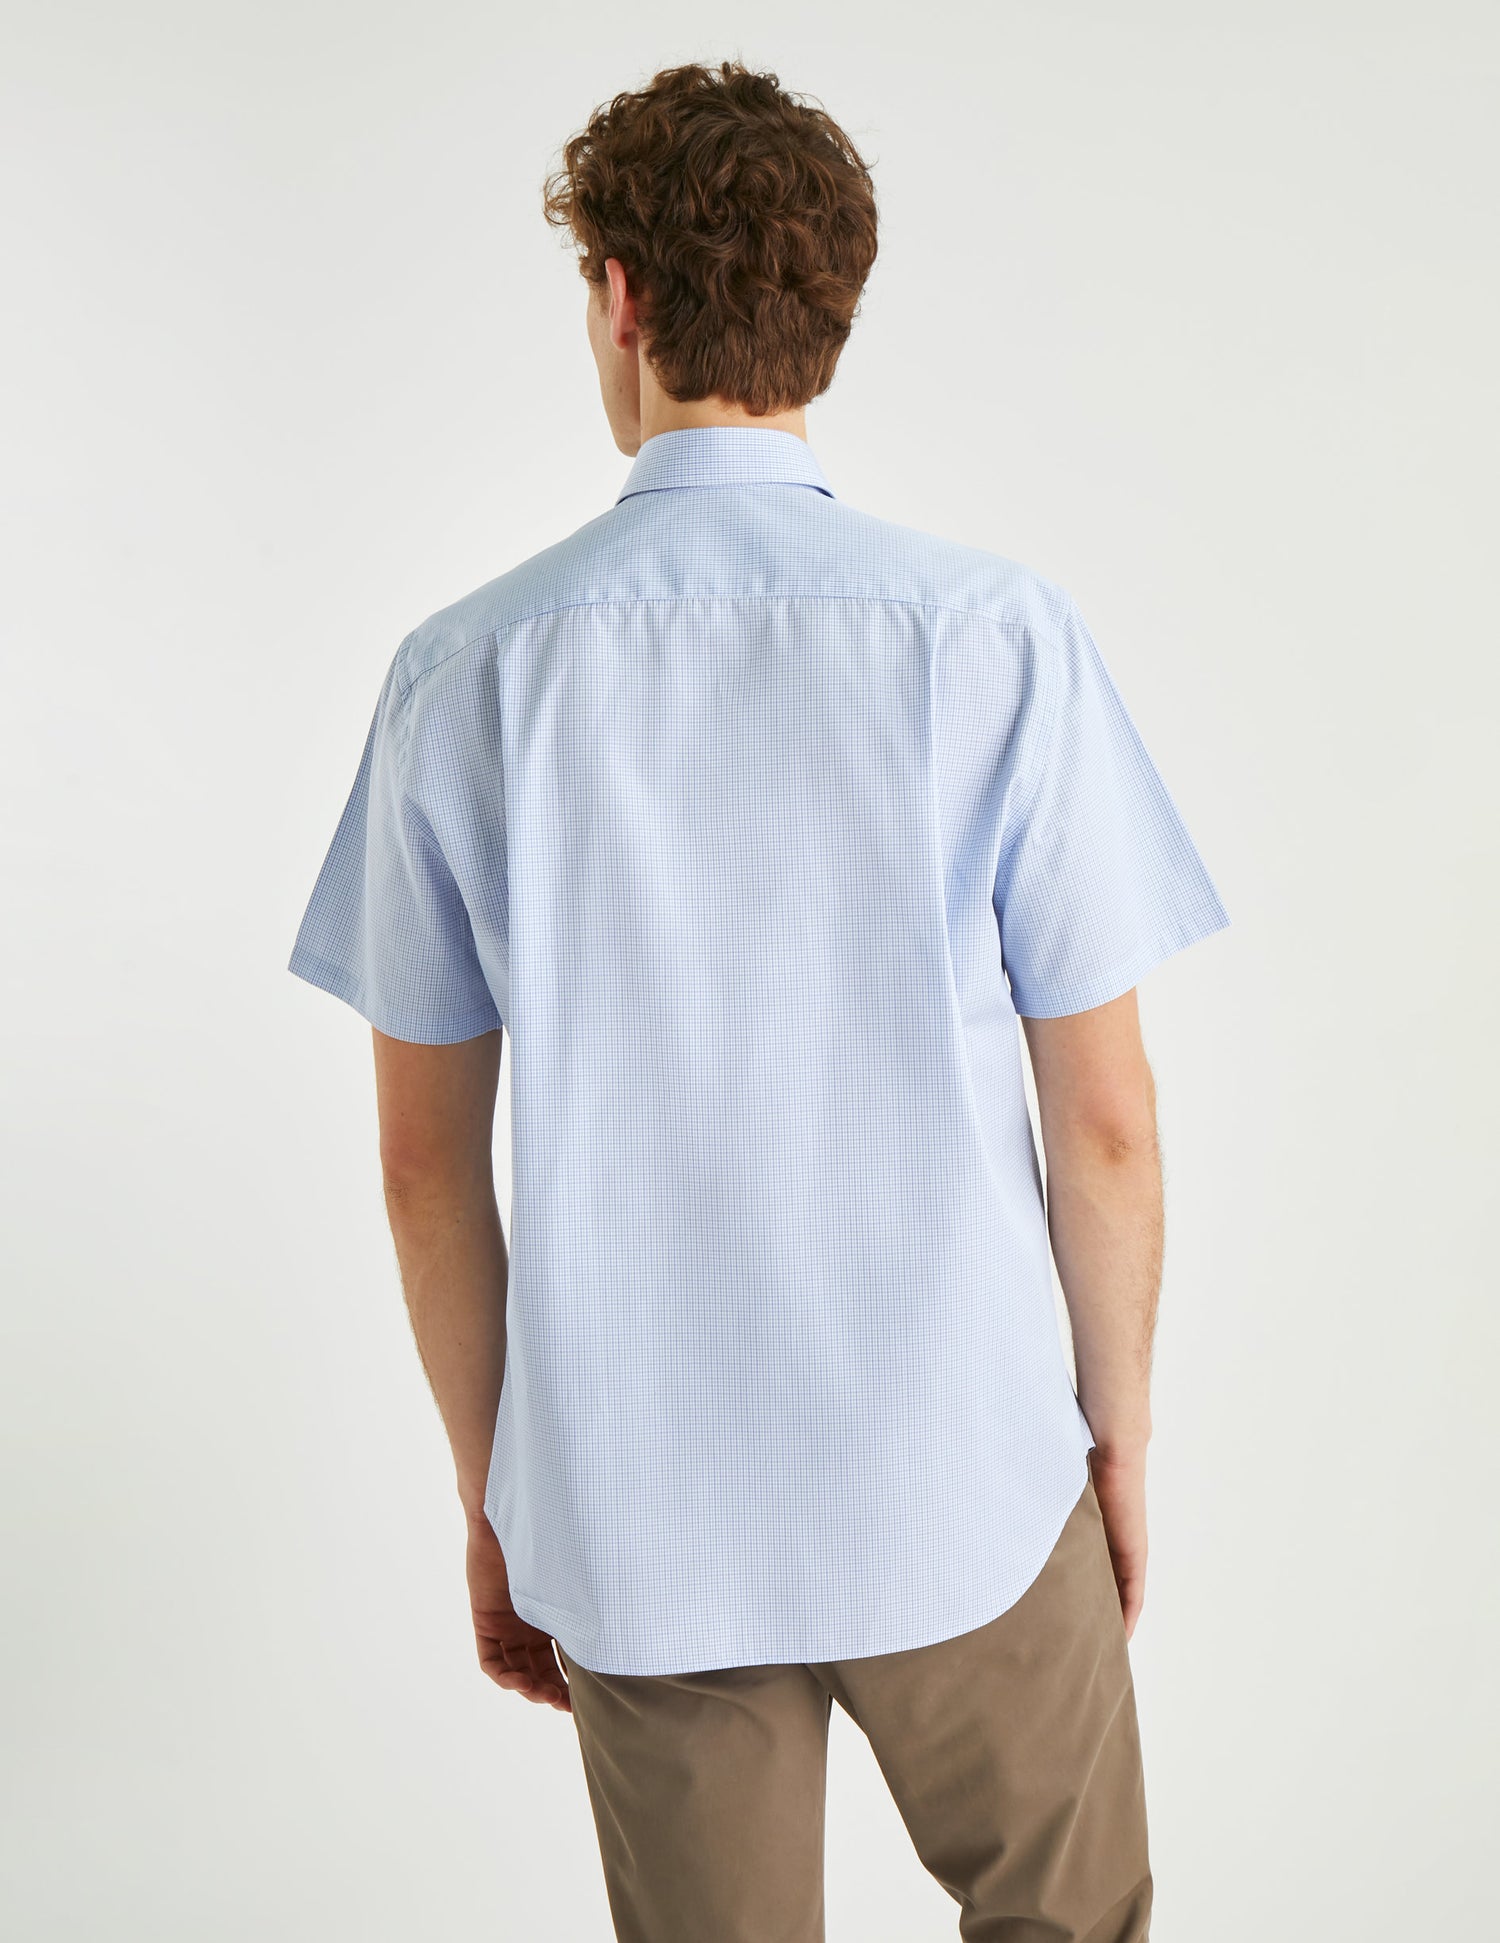 Classic short sleeve blue checked shirt - Poplin - American Collar#4